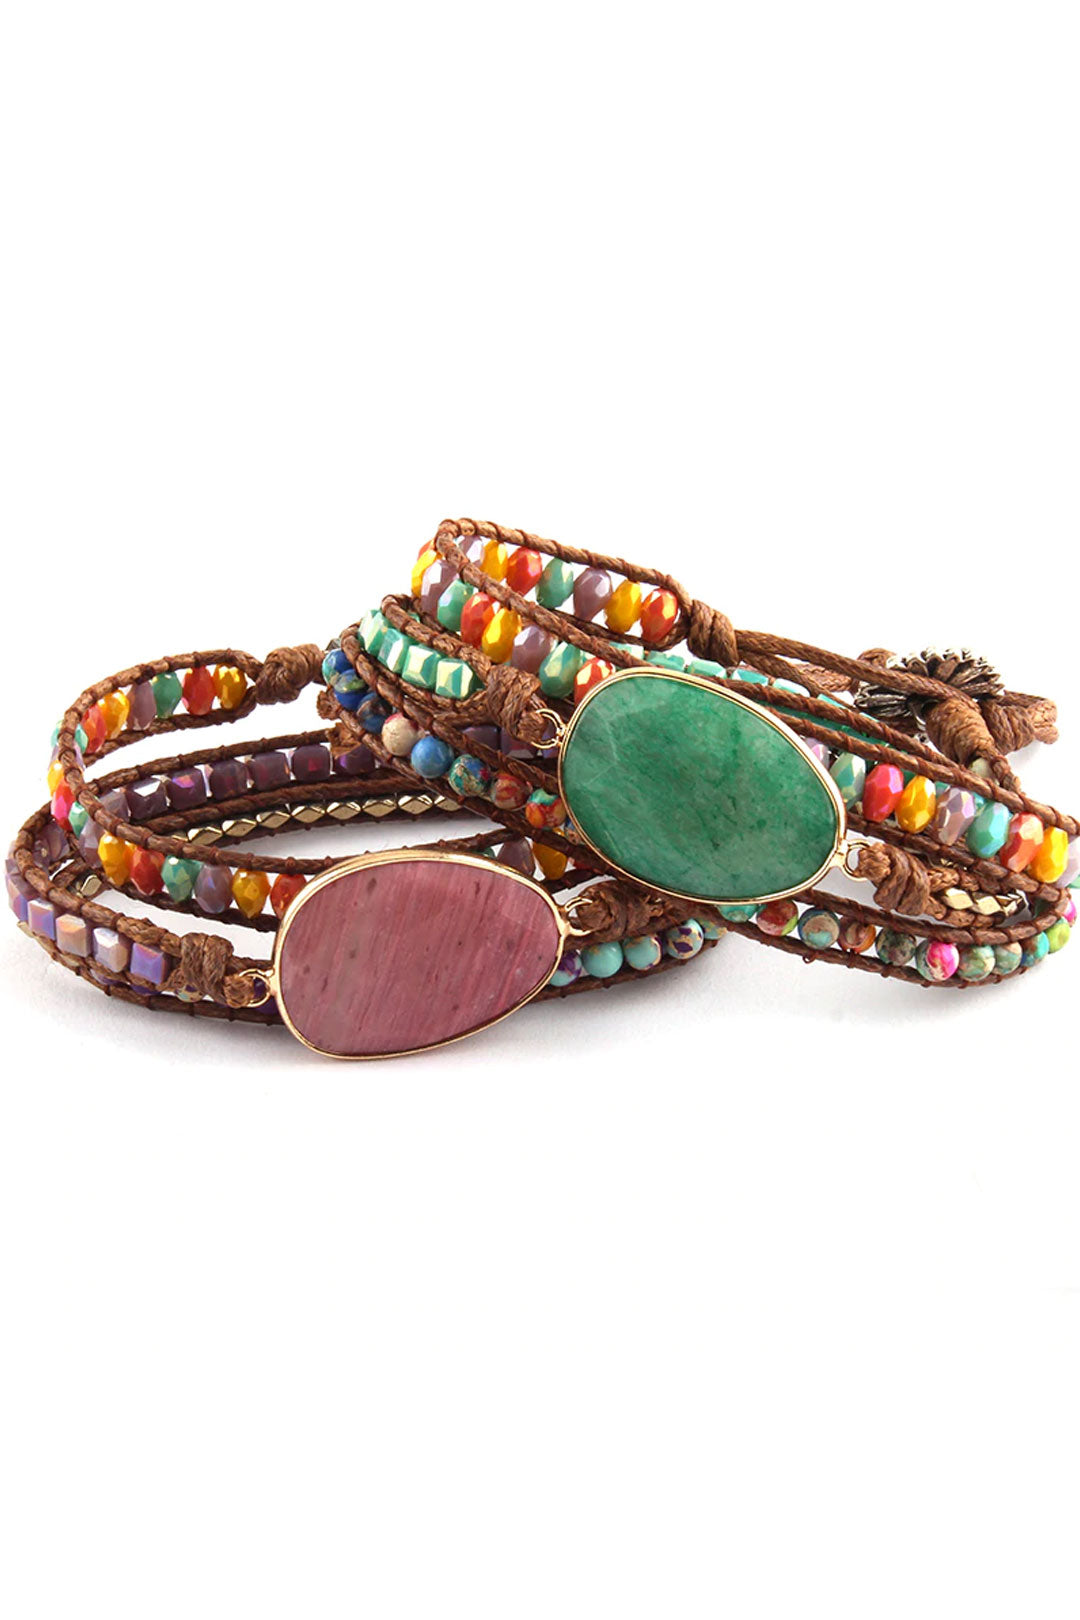 Boho Bracelet, RH 5 Layers Leather Wrap Bracelet,  Mixed Natural Stones & Crystal Stone Blue and Purple